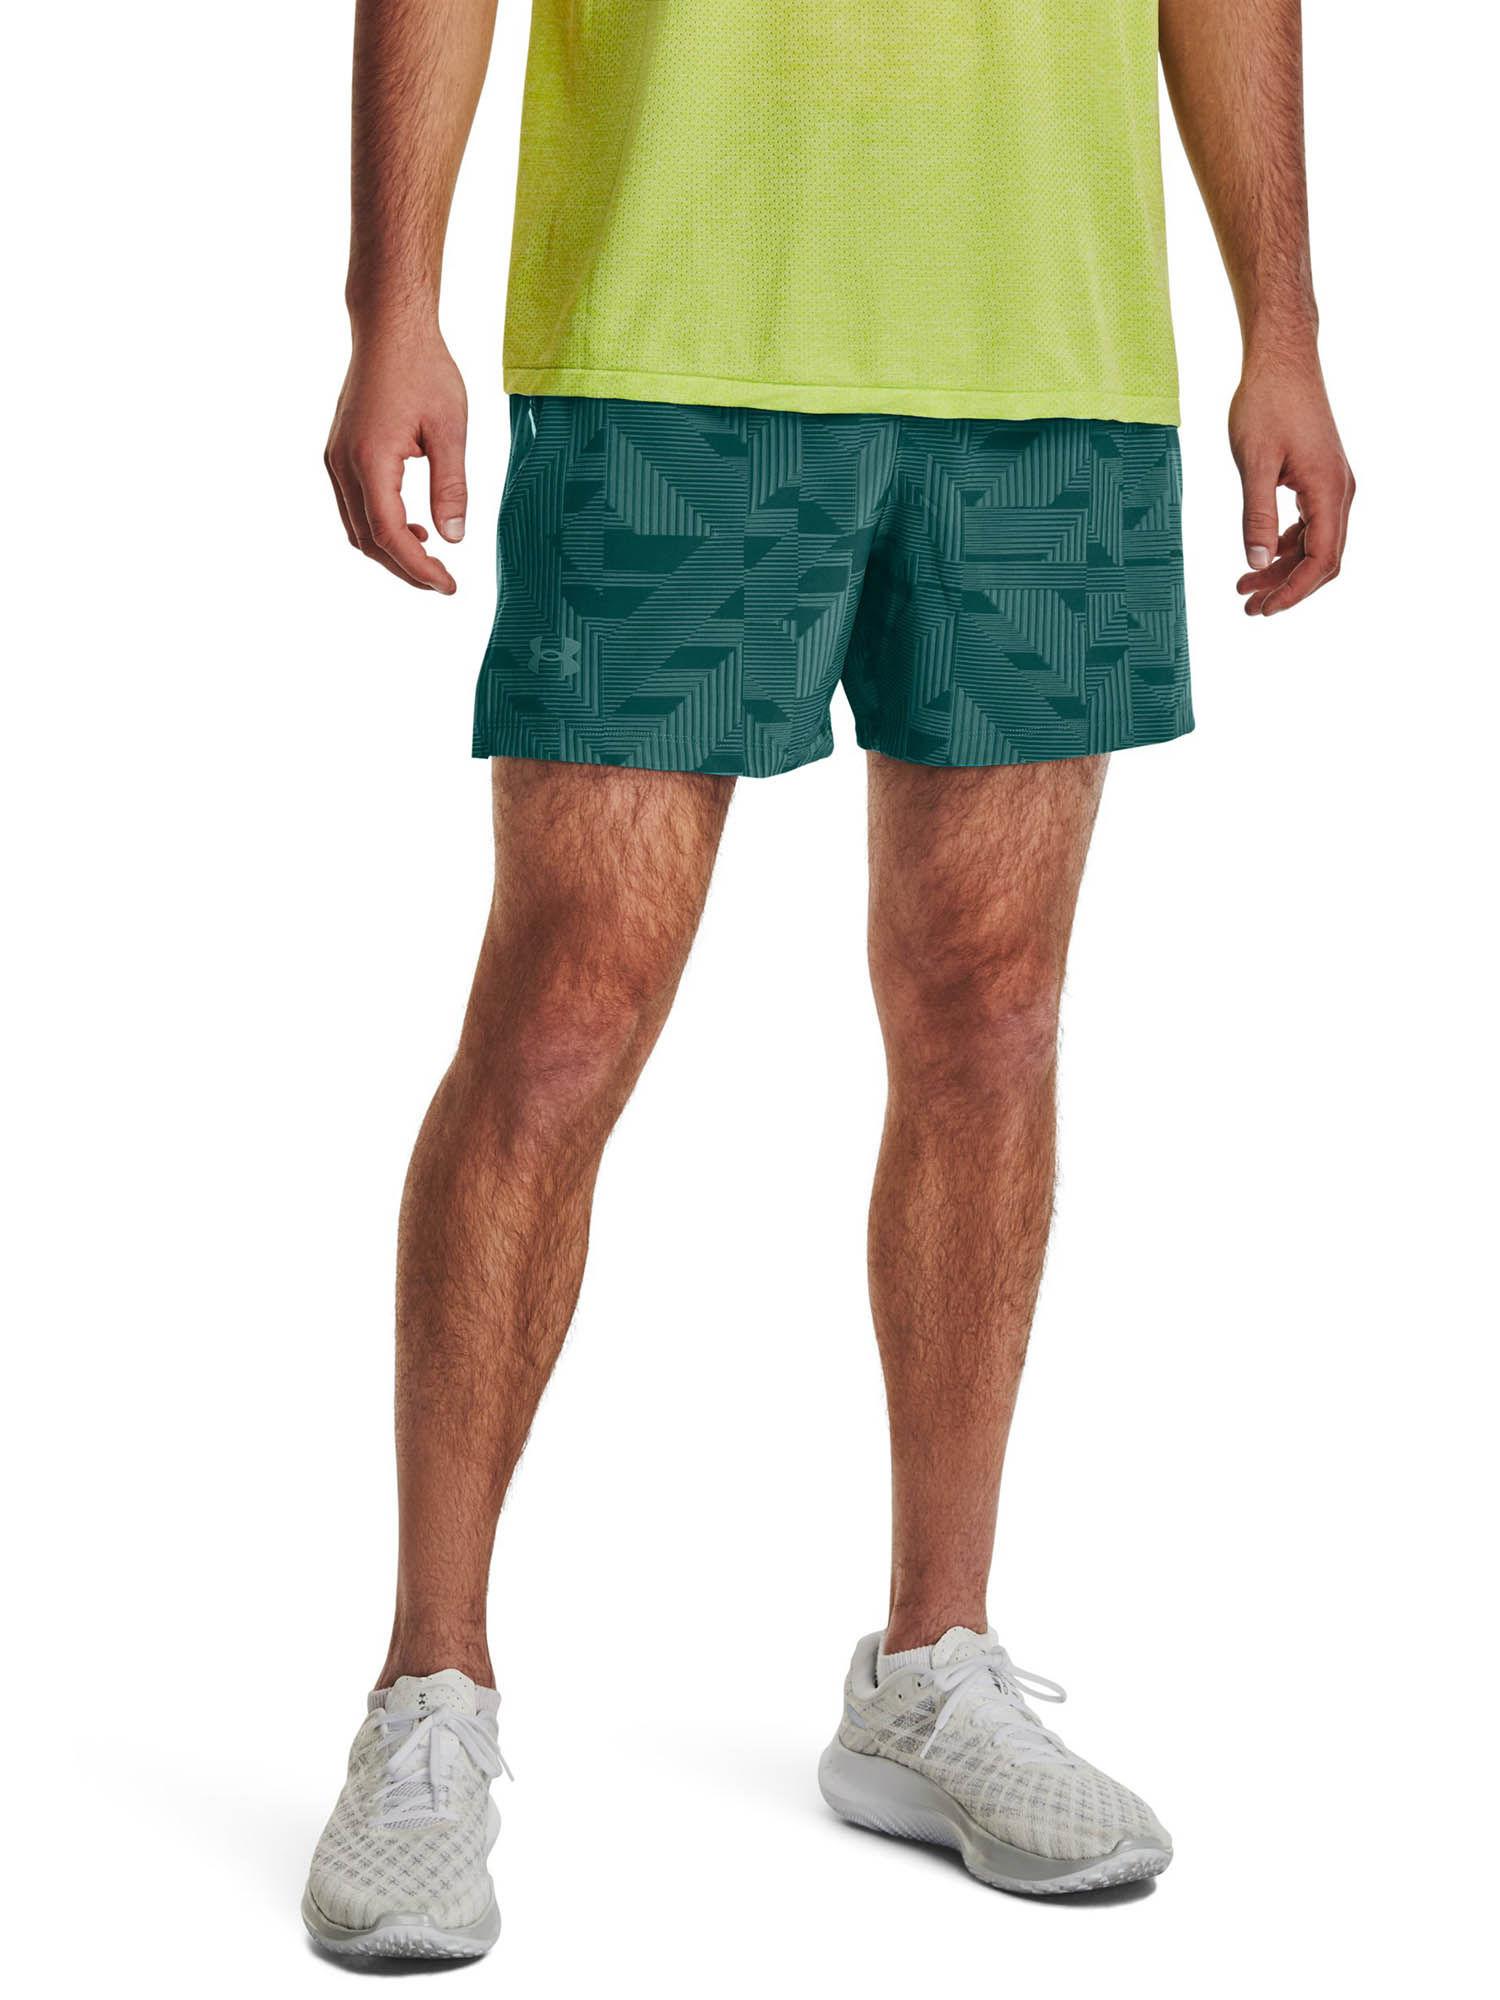 launch-elite-shorts-green